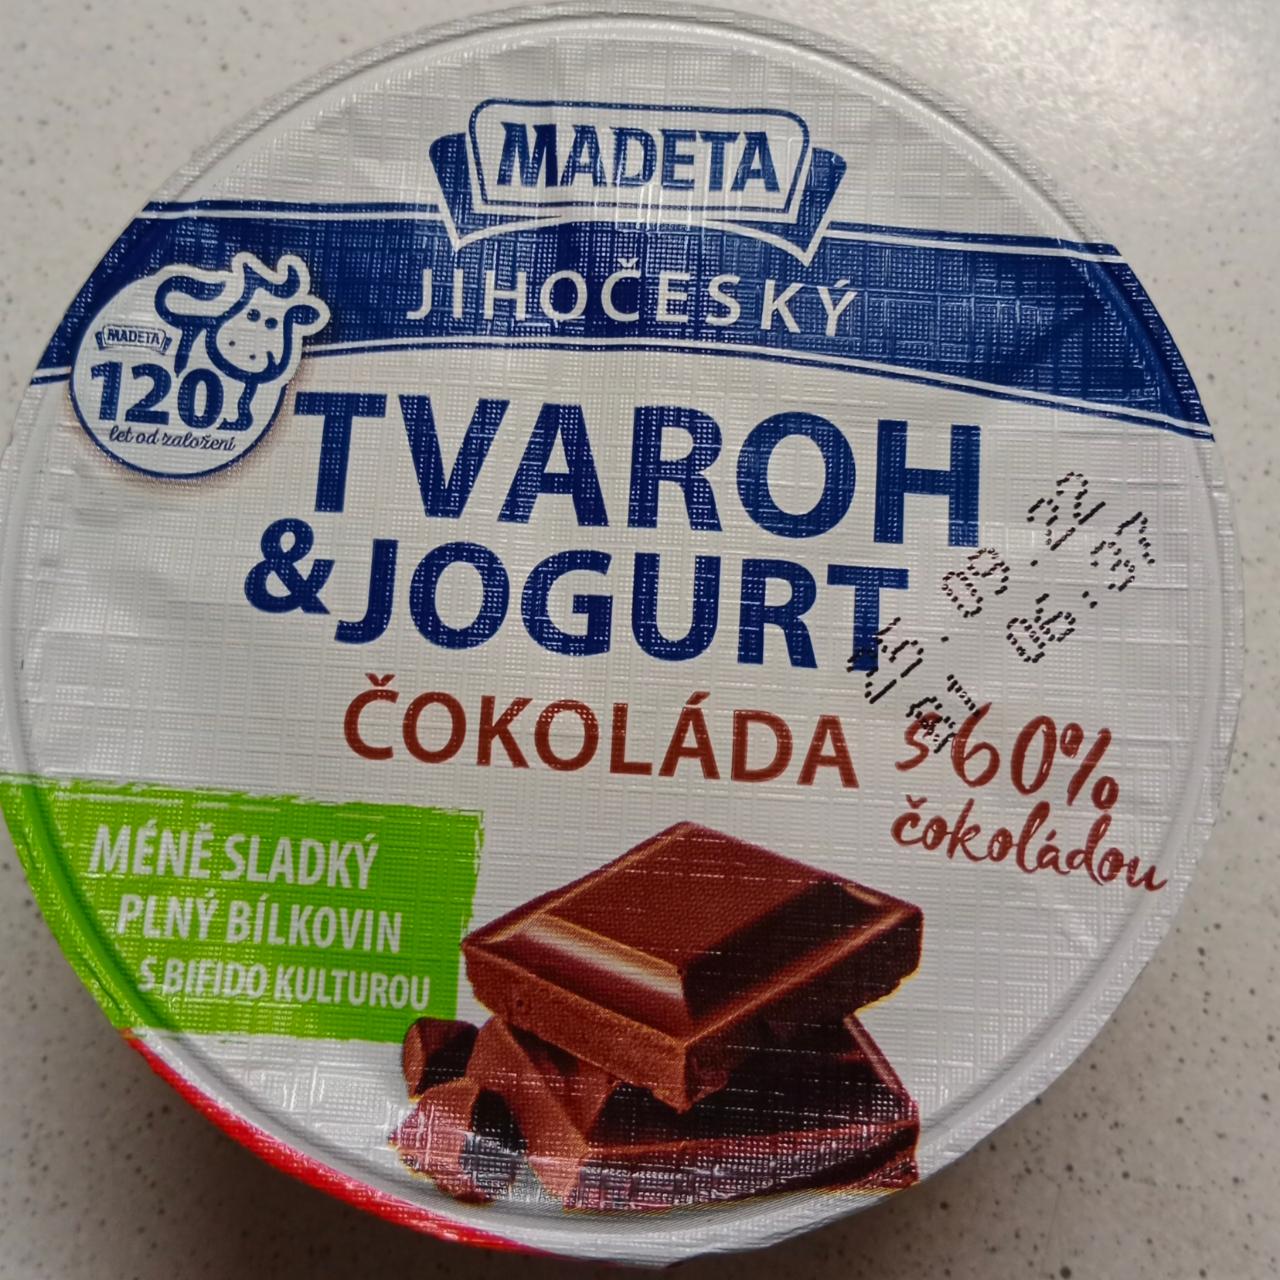 Фото - творог с йогуртом со вкусом шоколада jihočesky tvaroh Madeta